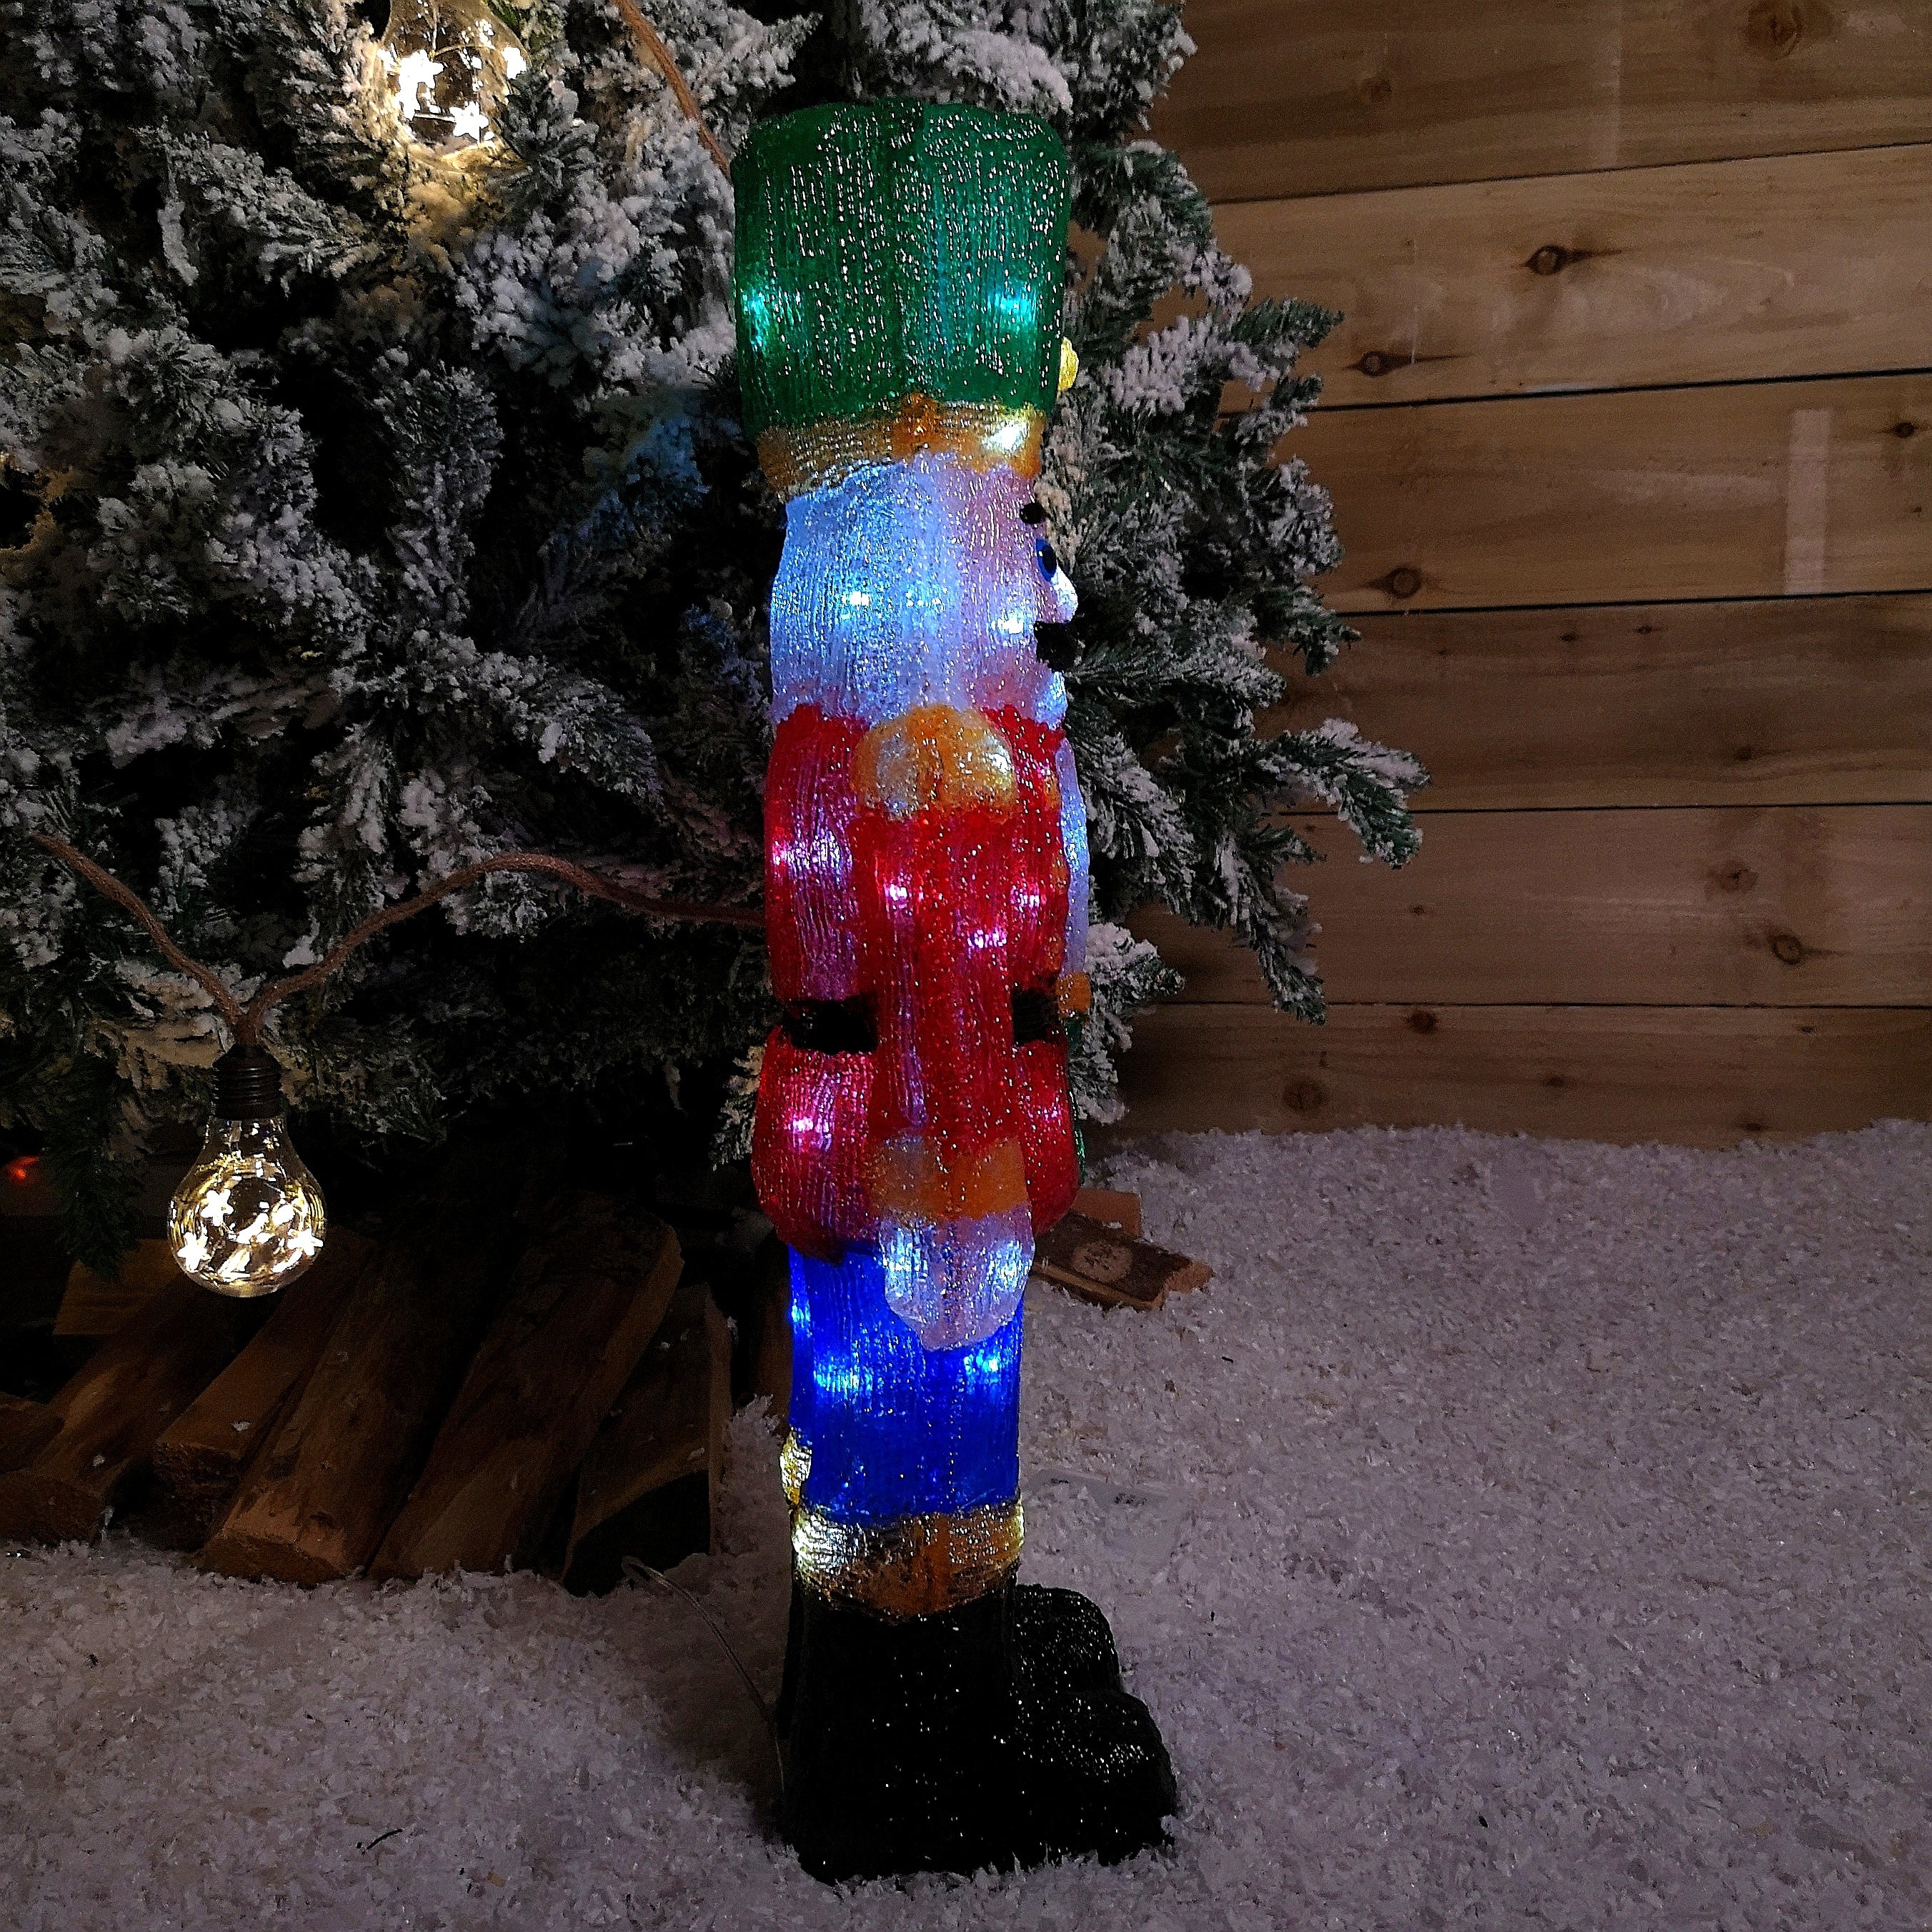 59cm Battery Operated Light up Acrylic Christmas Nutcracker Decoration with White LEDs